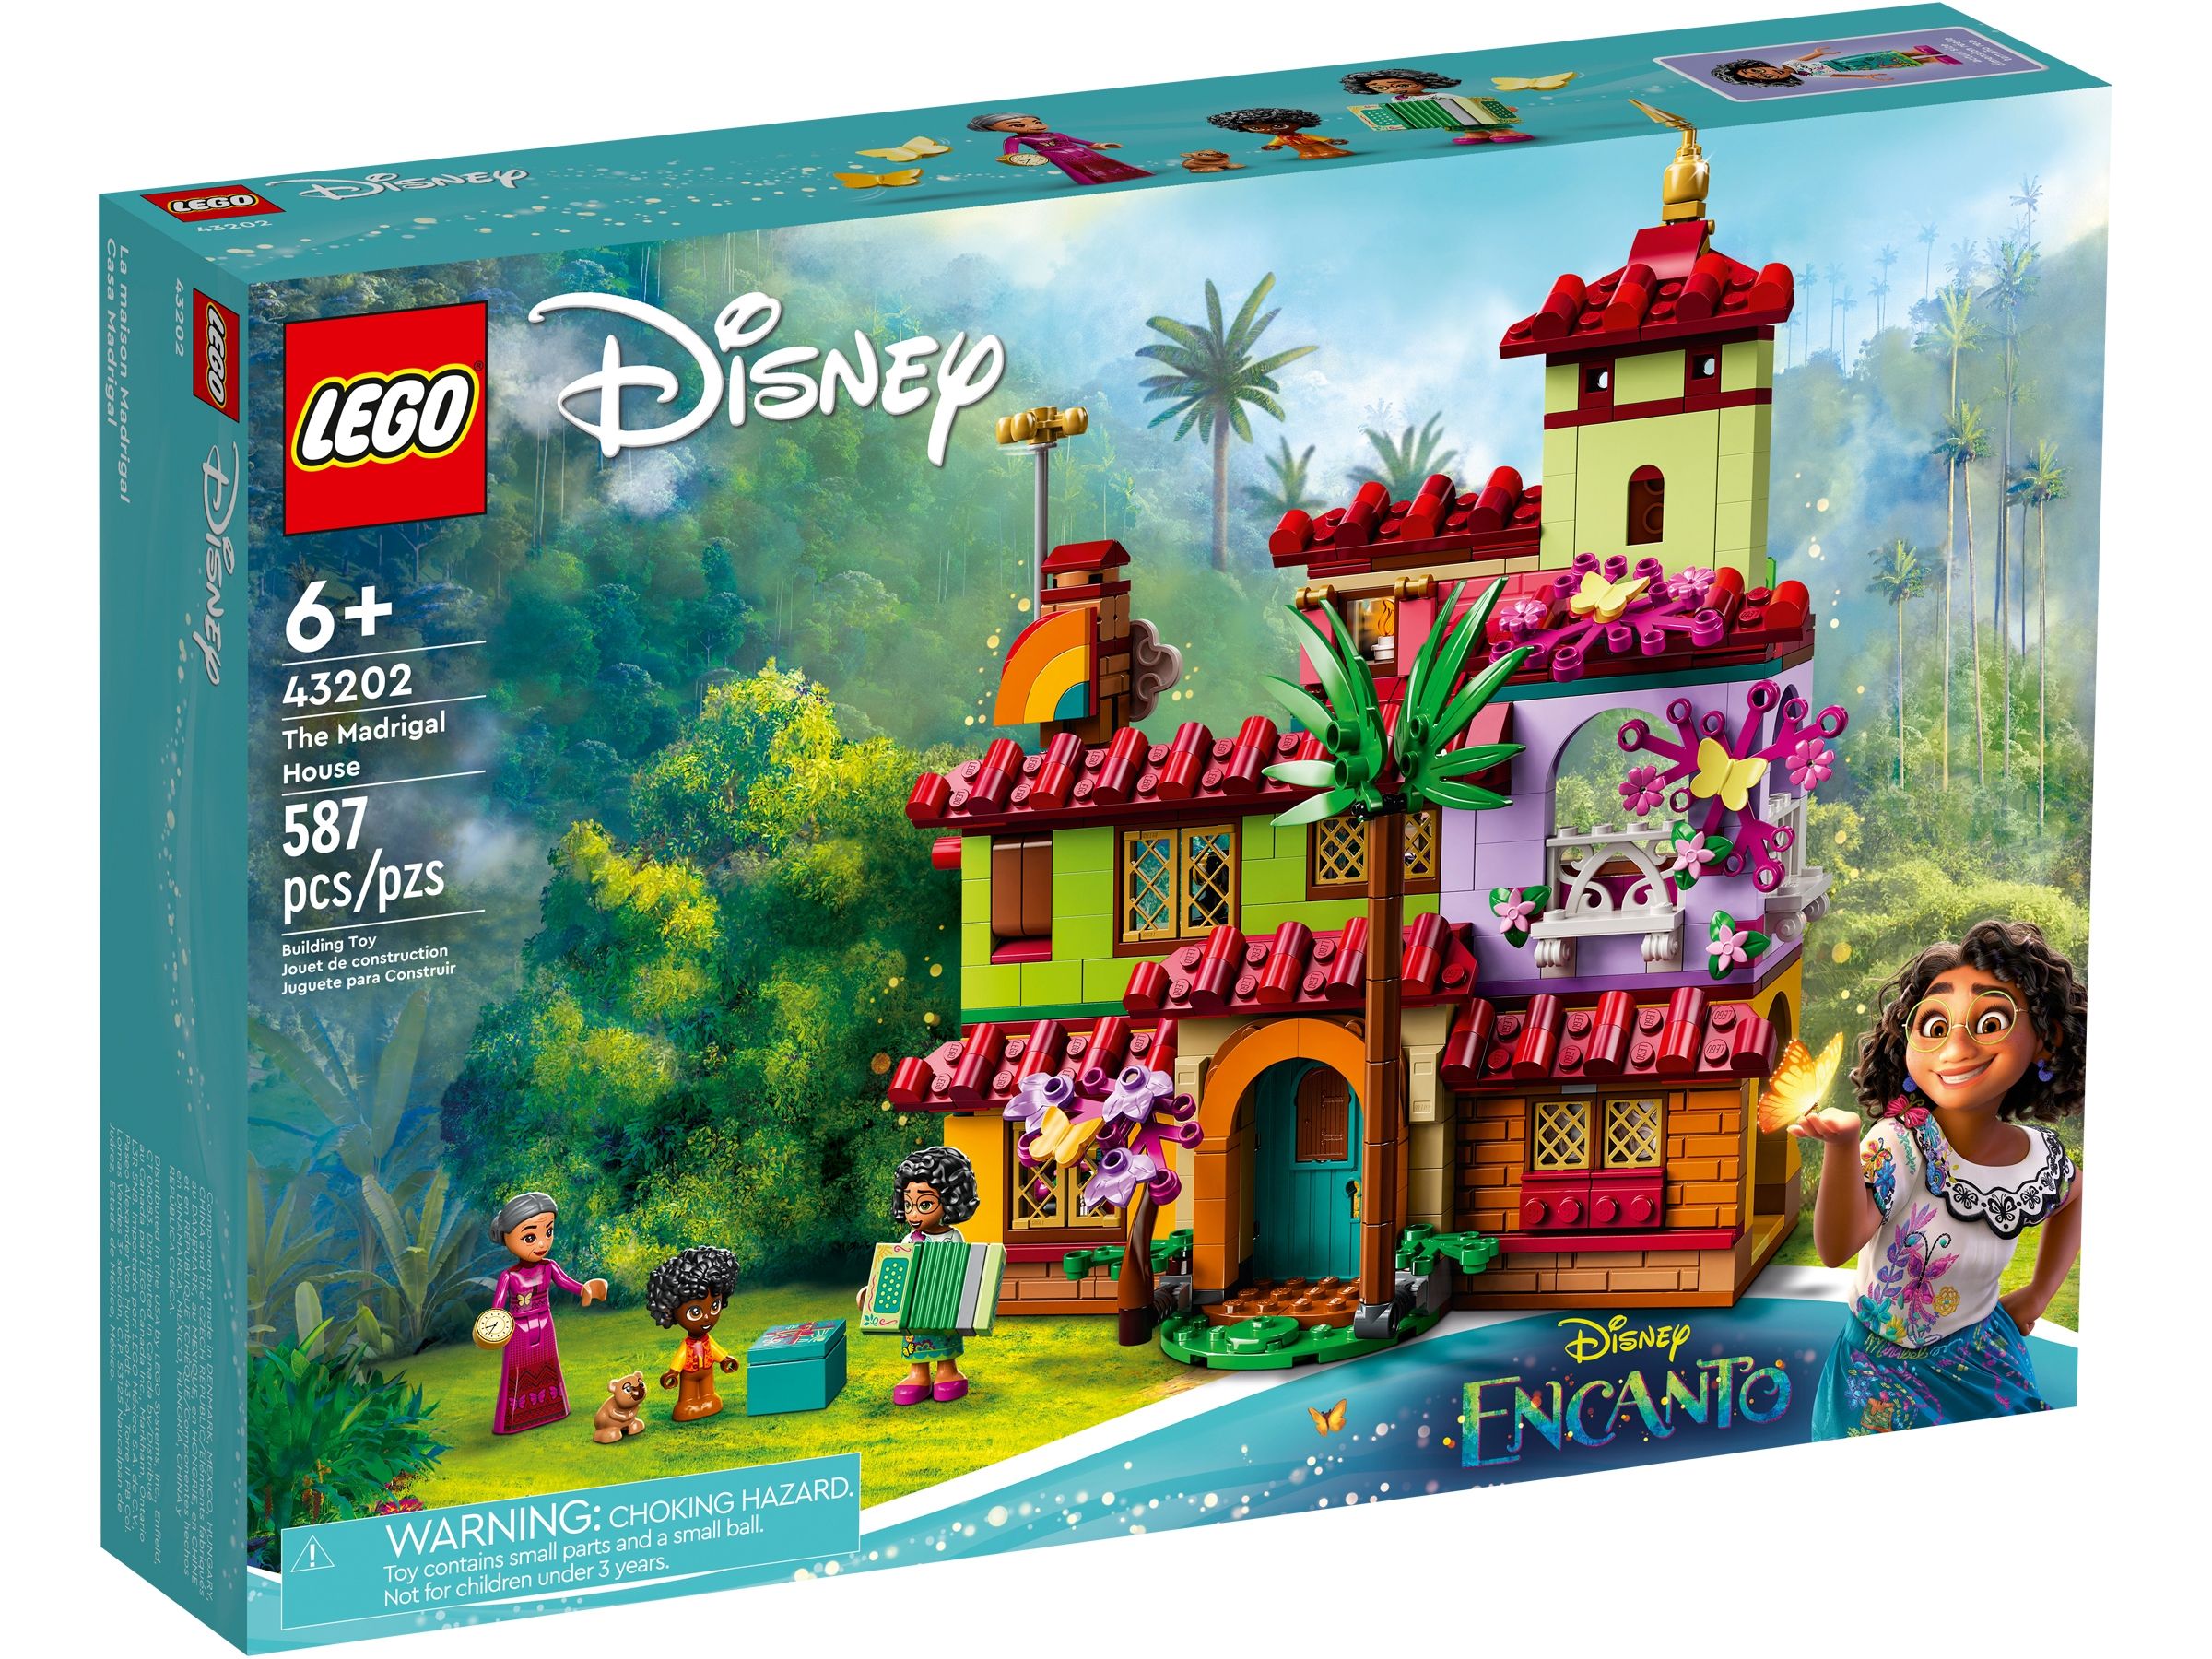 LEGO Disney 5008116 Magie-Paket LEGO_43202_alt1.jpg